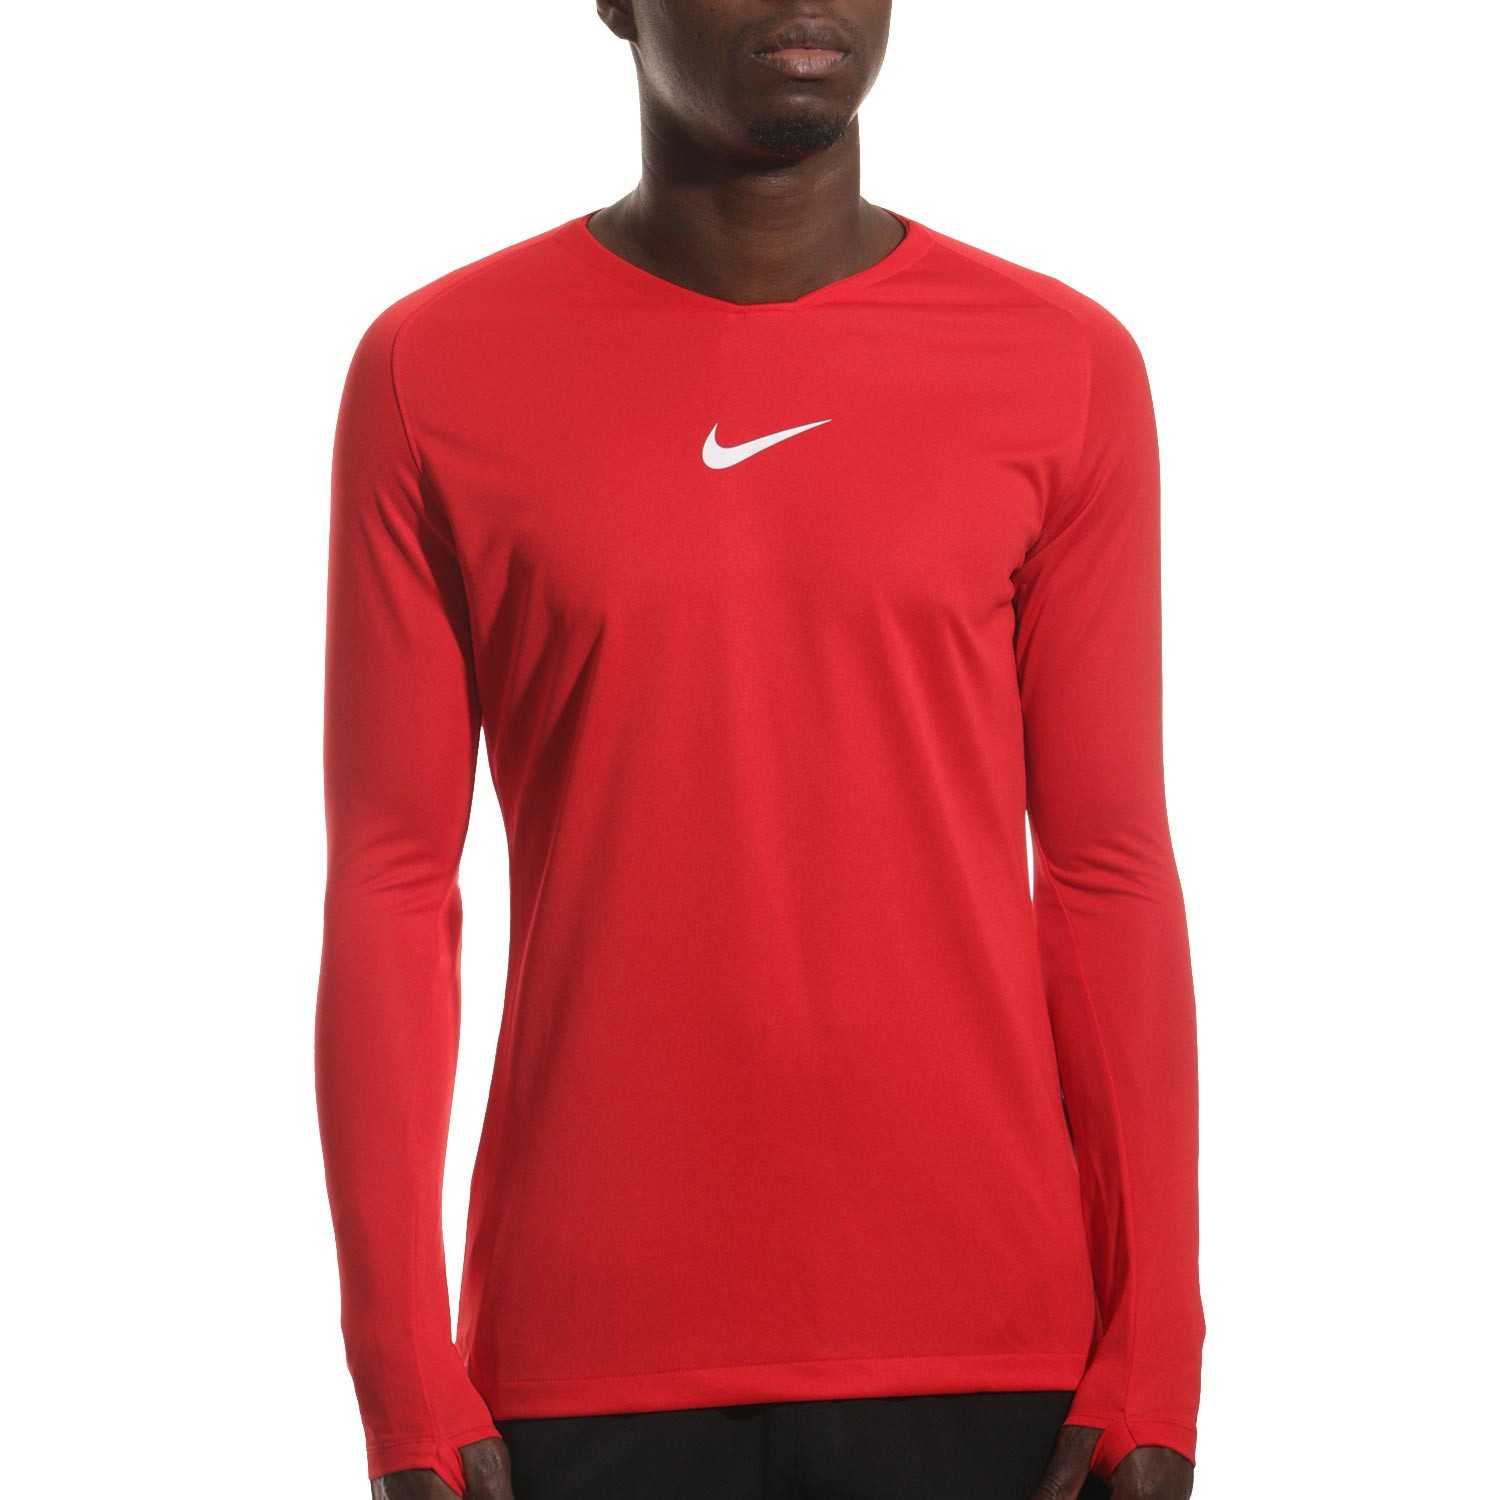 Camiseta térmica manga larga Nike roja |futbolmania